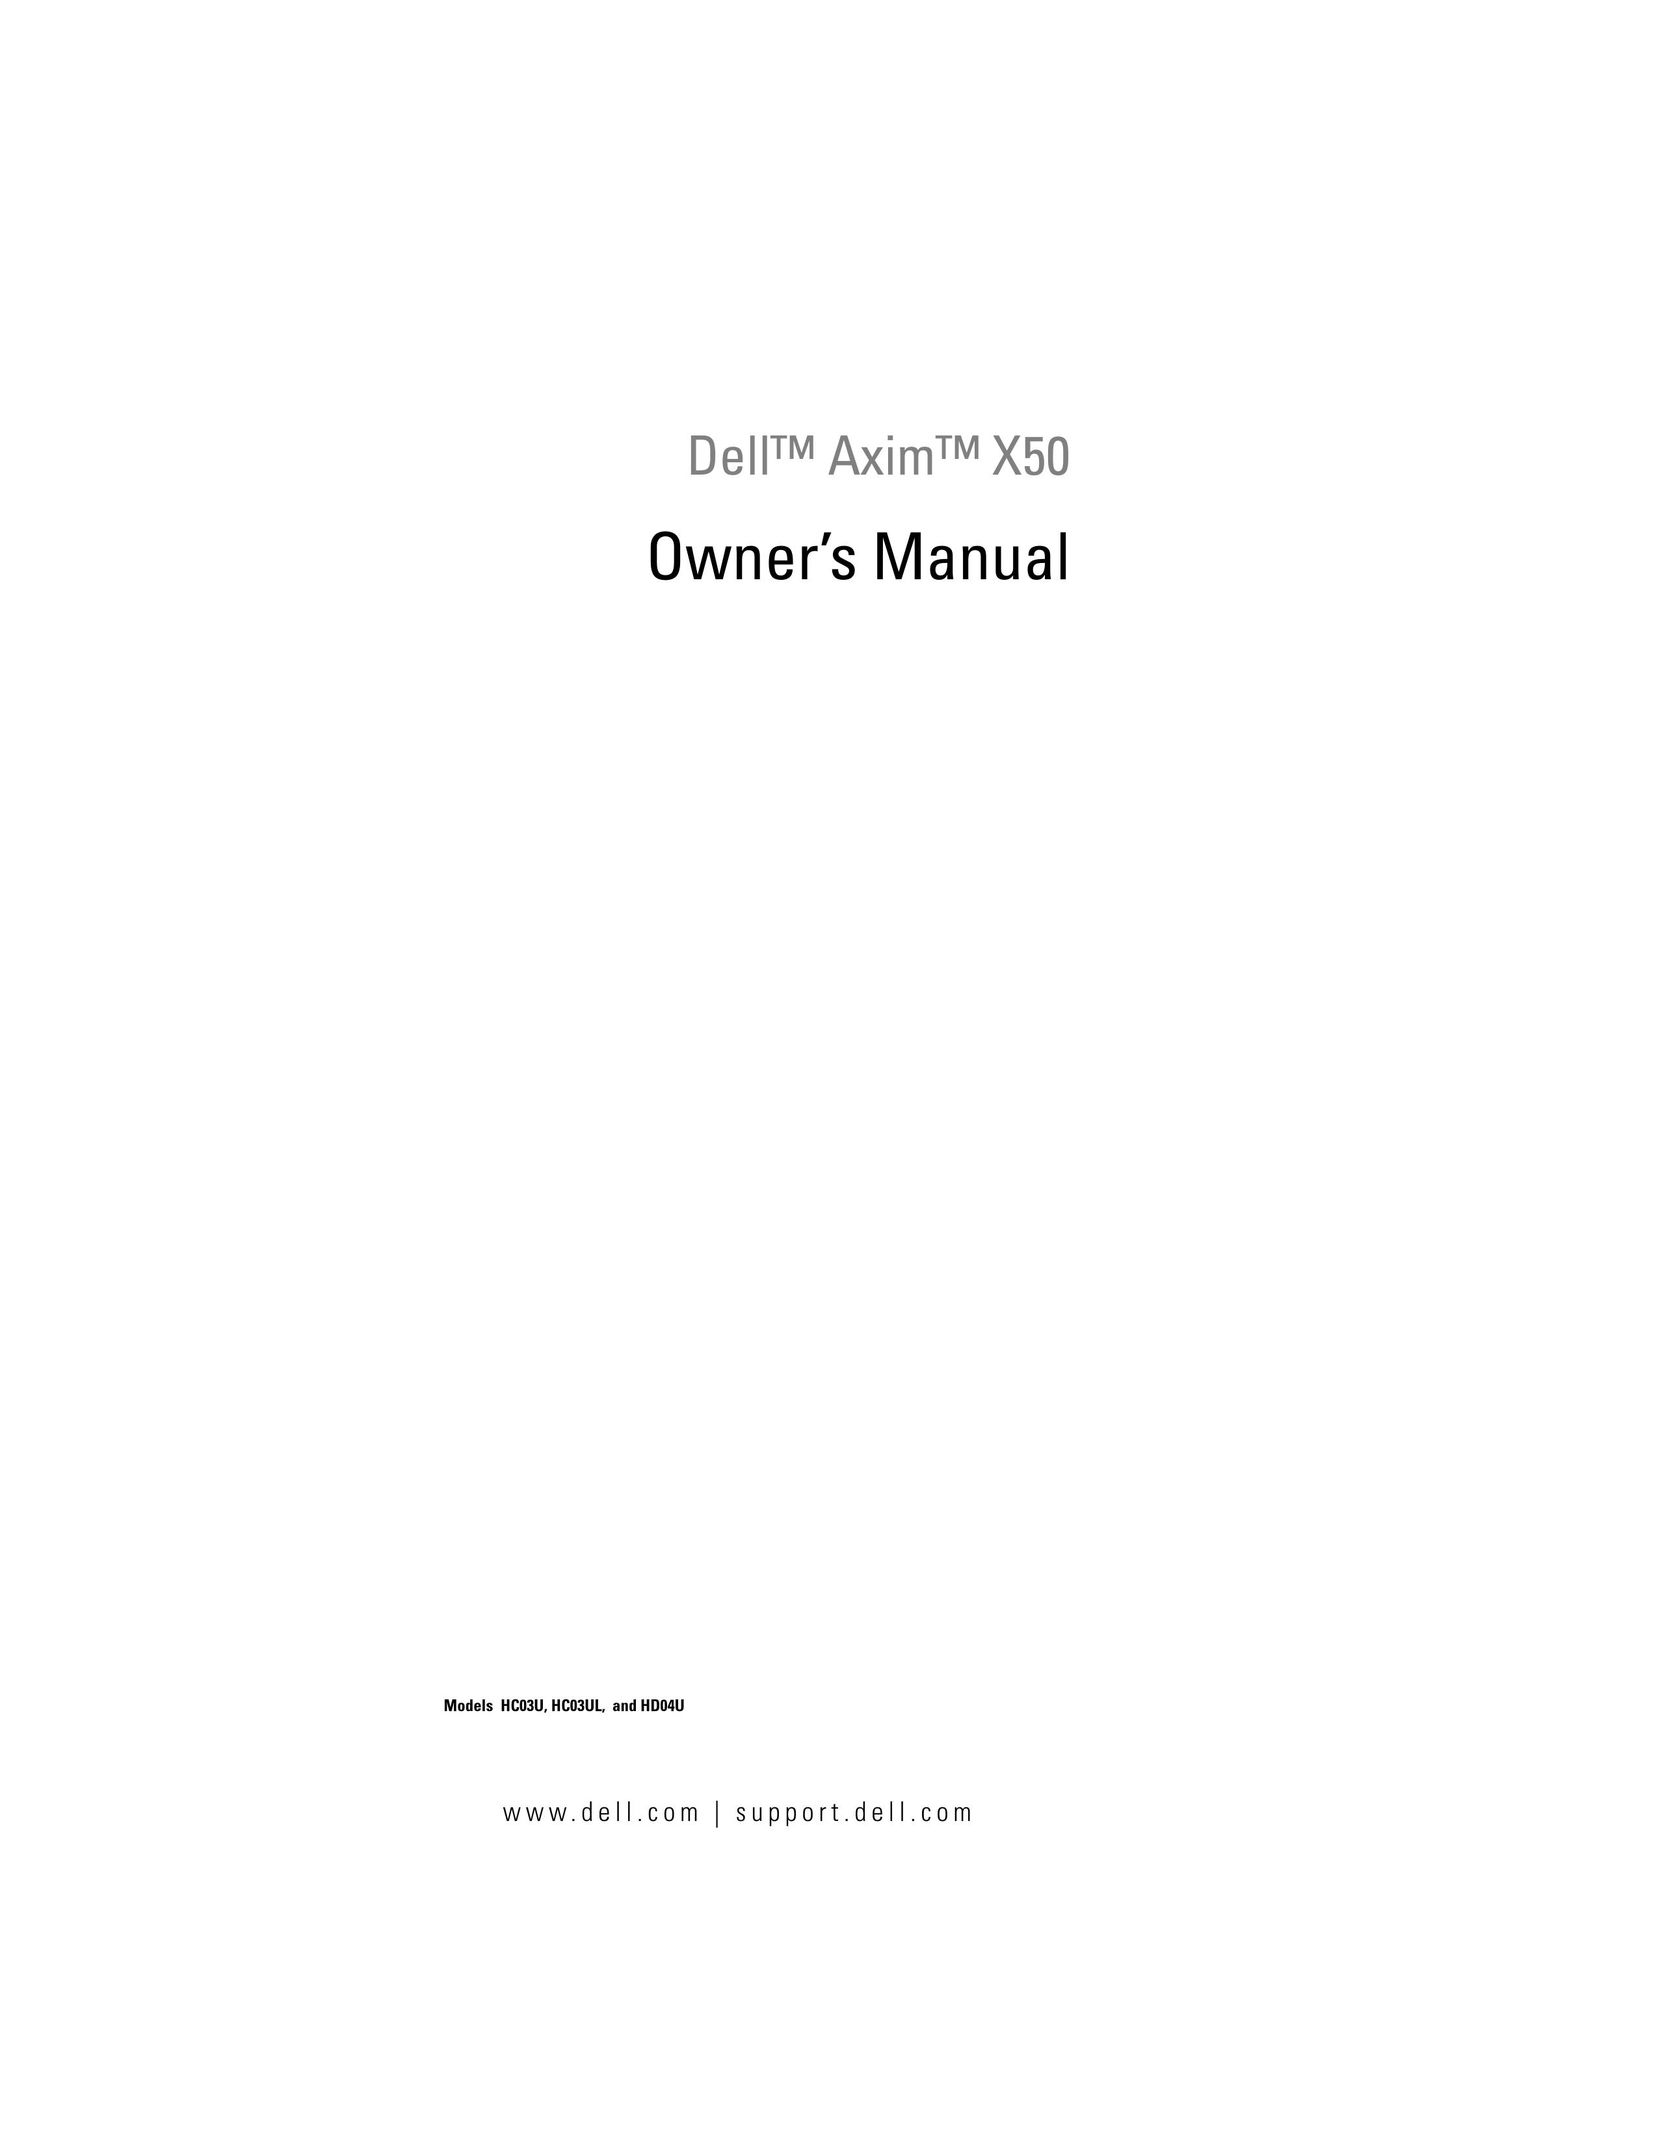 Dell X50 PDAs & Smartphones User Manual